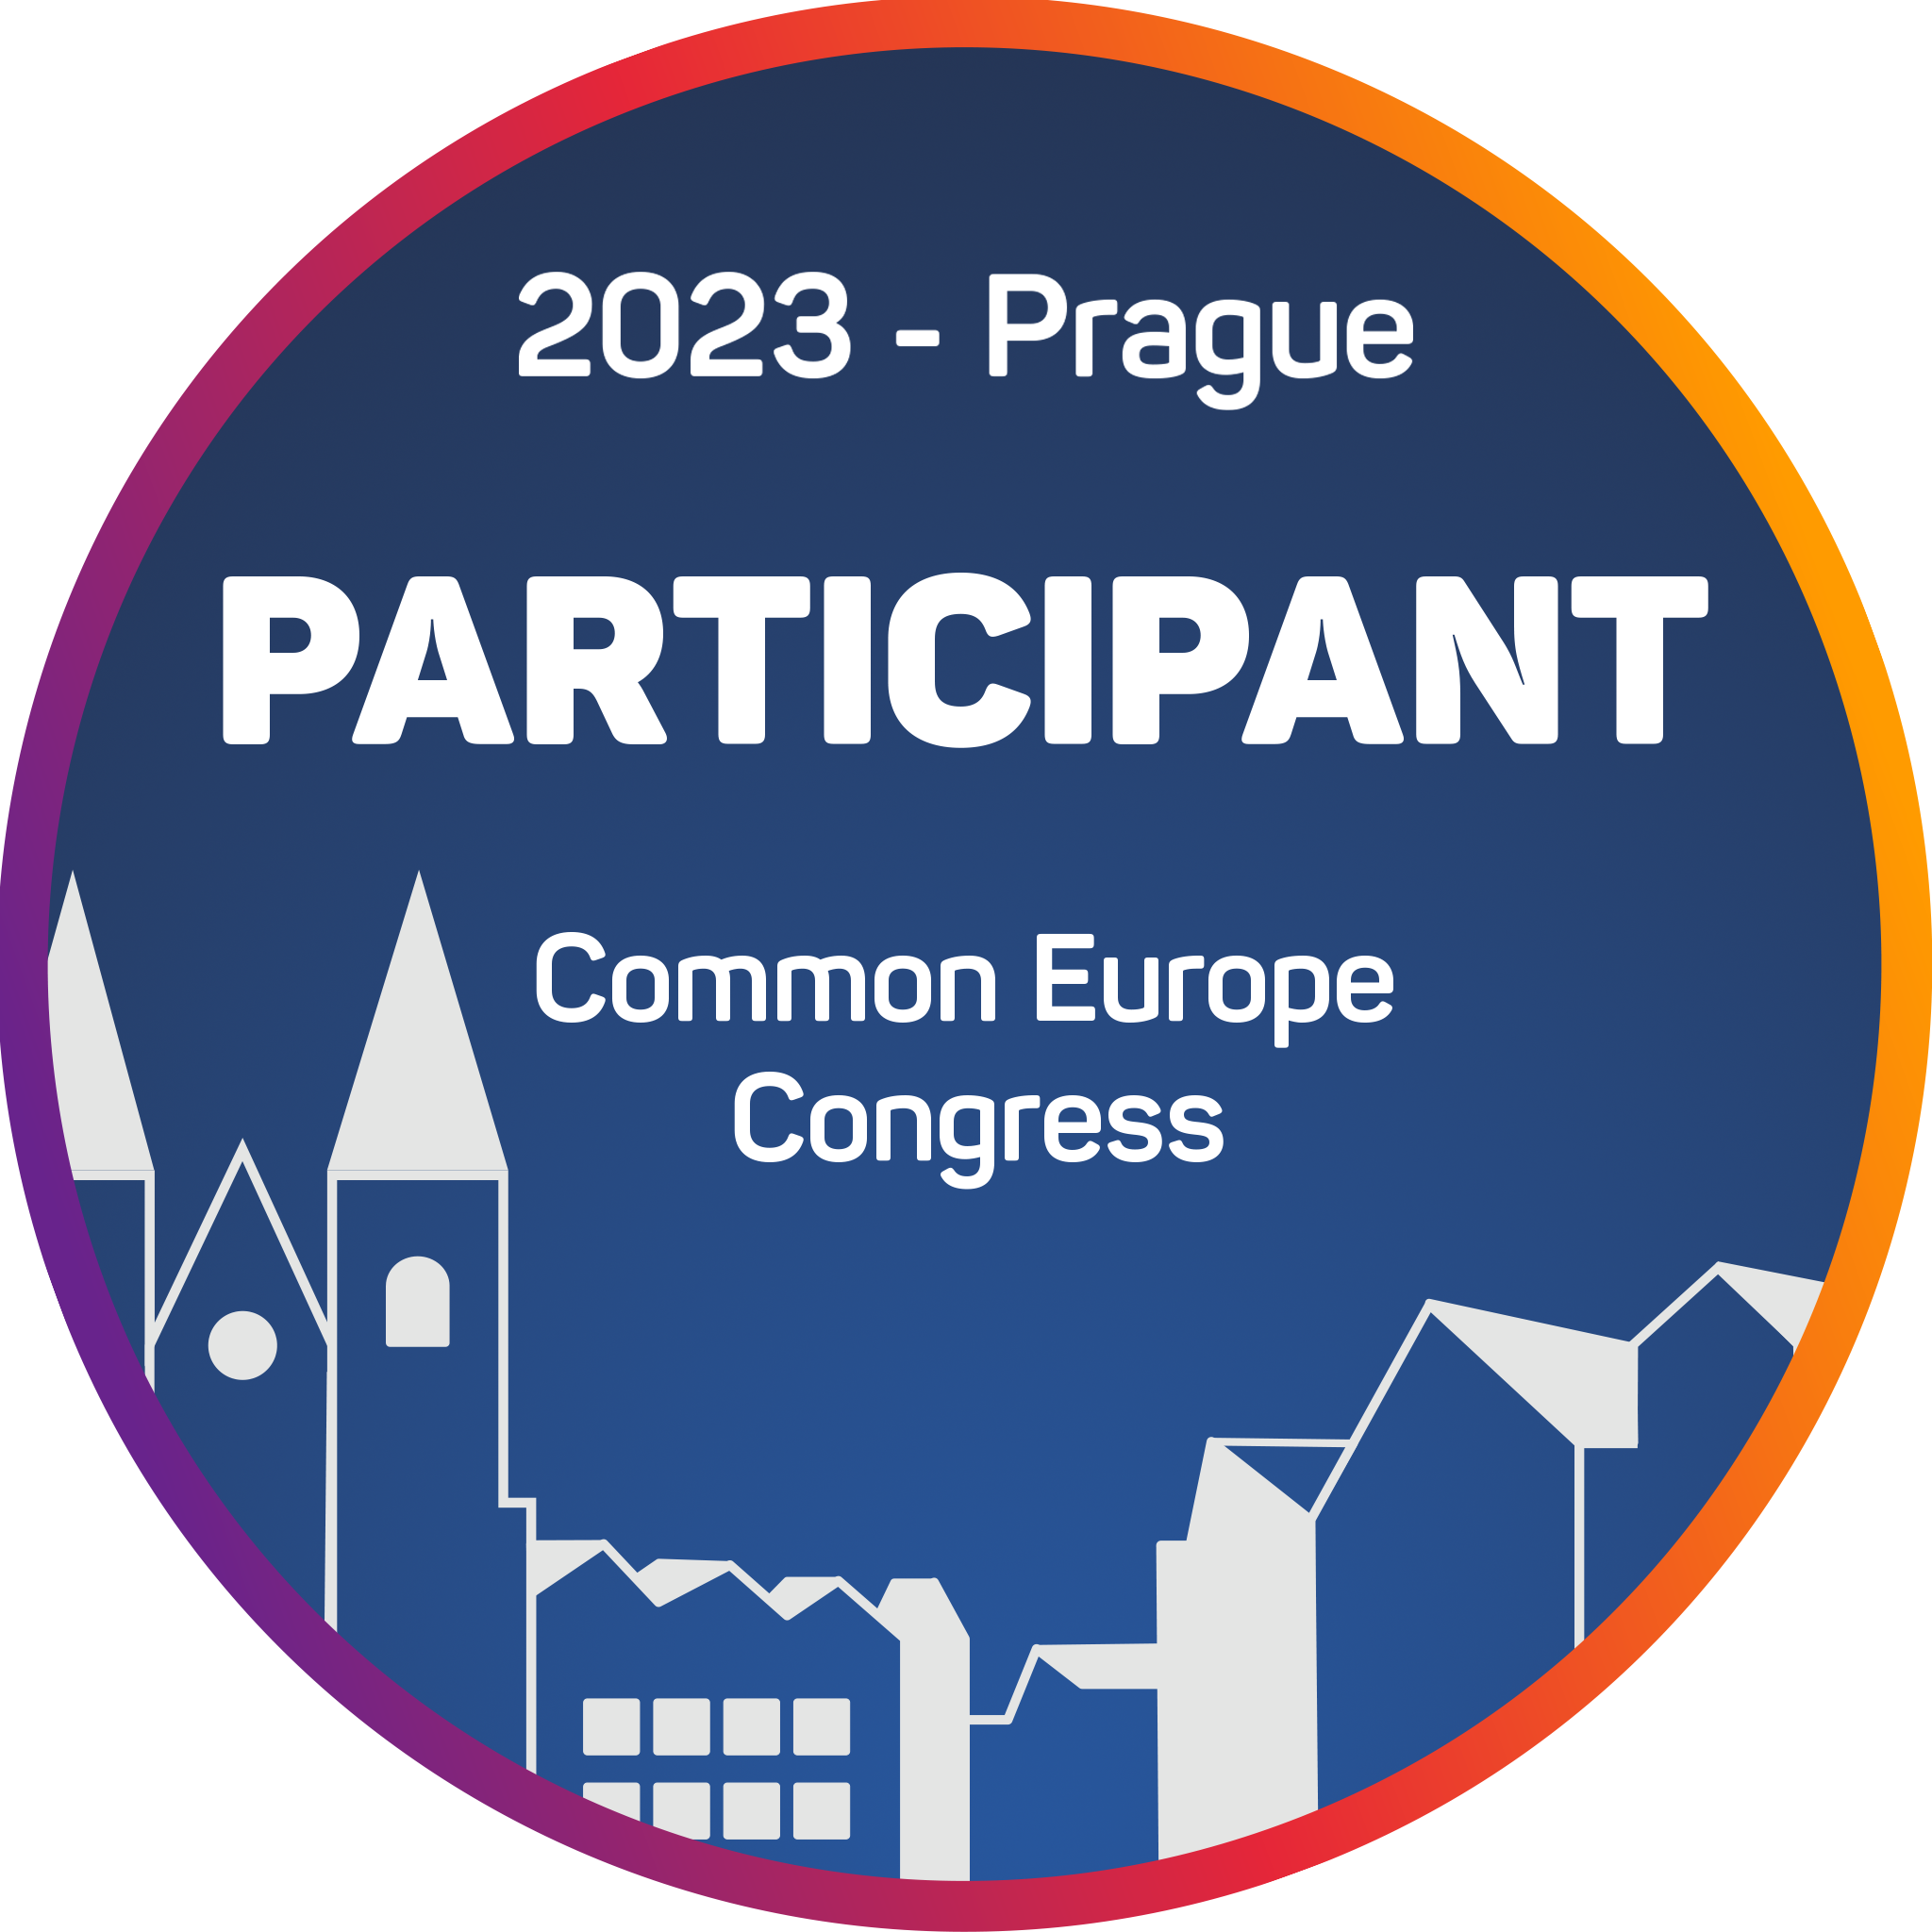 Participant Common Europe Congress 2023 - Prague